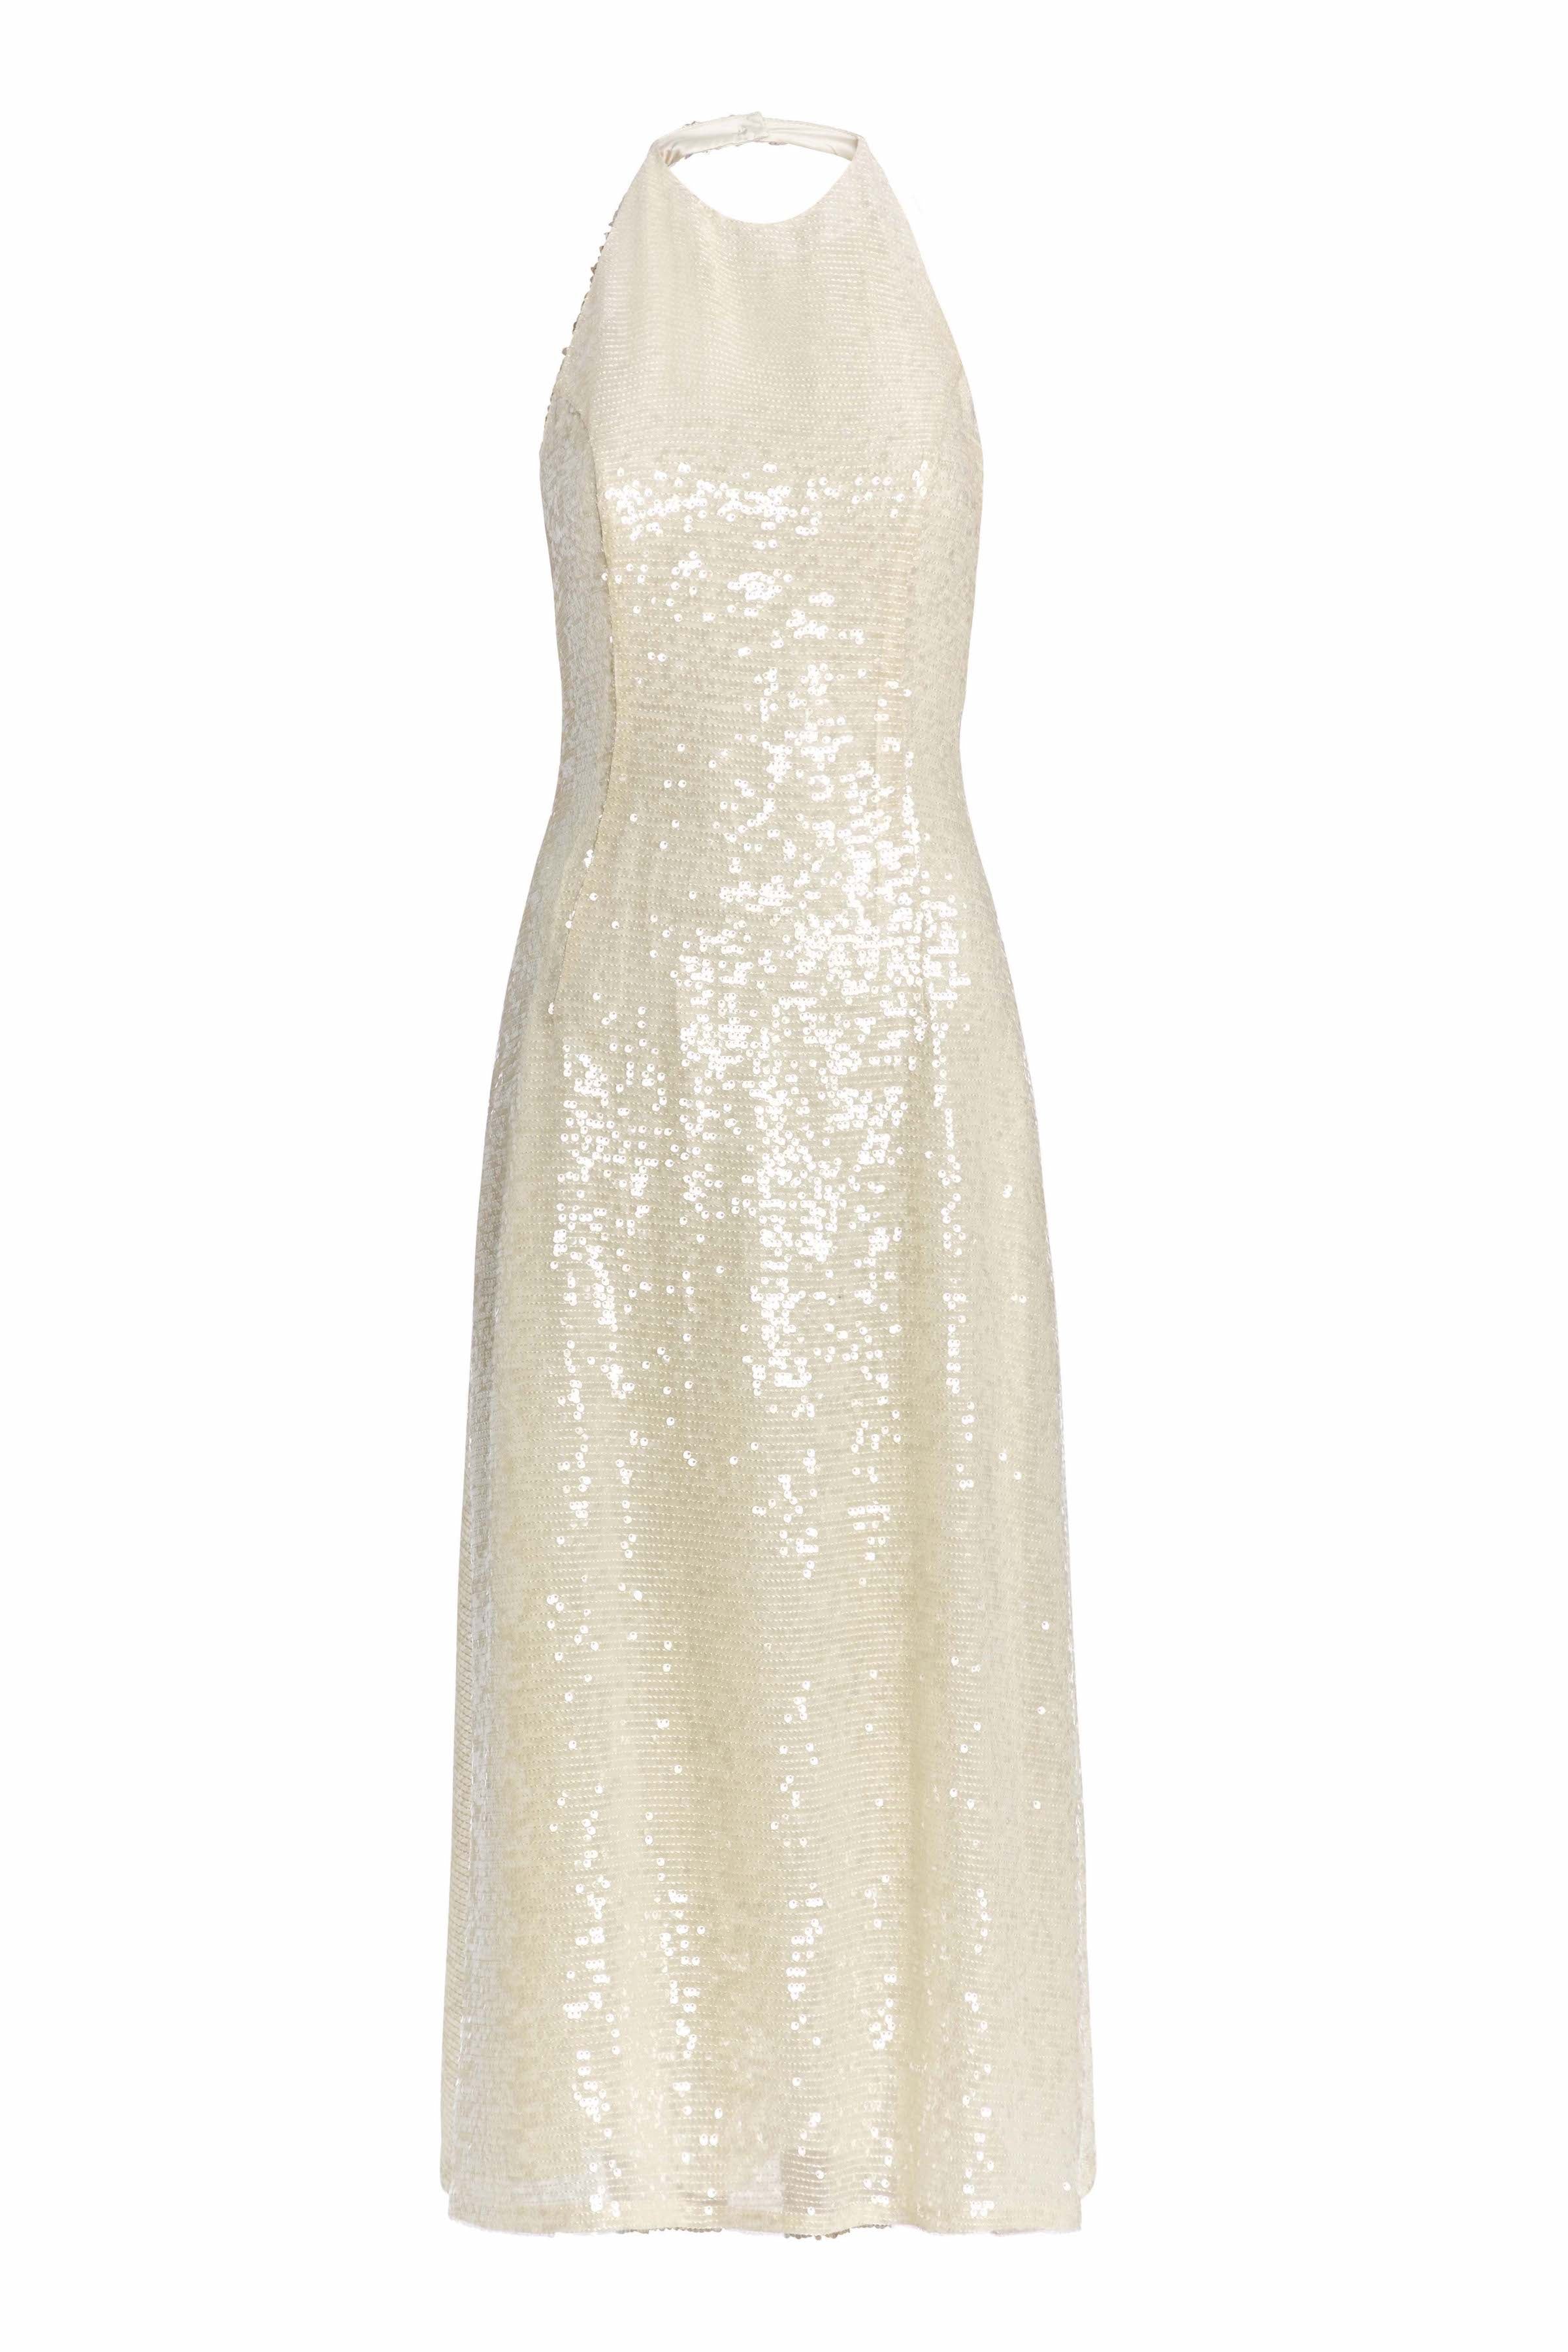 FINAL SALE: Lucille Champagne Sequin Halter Dress